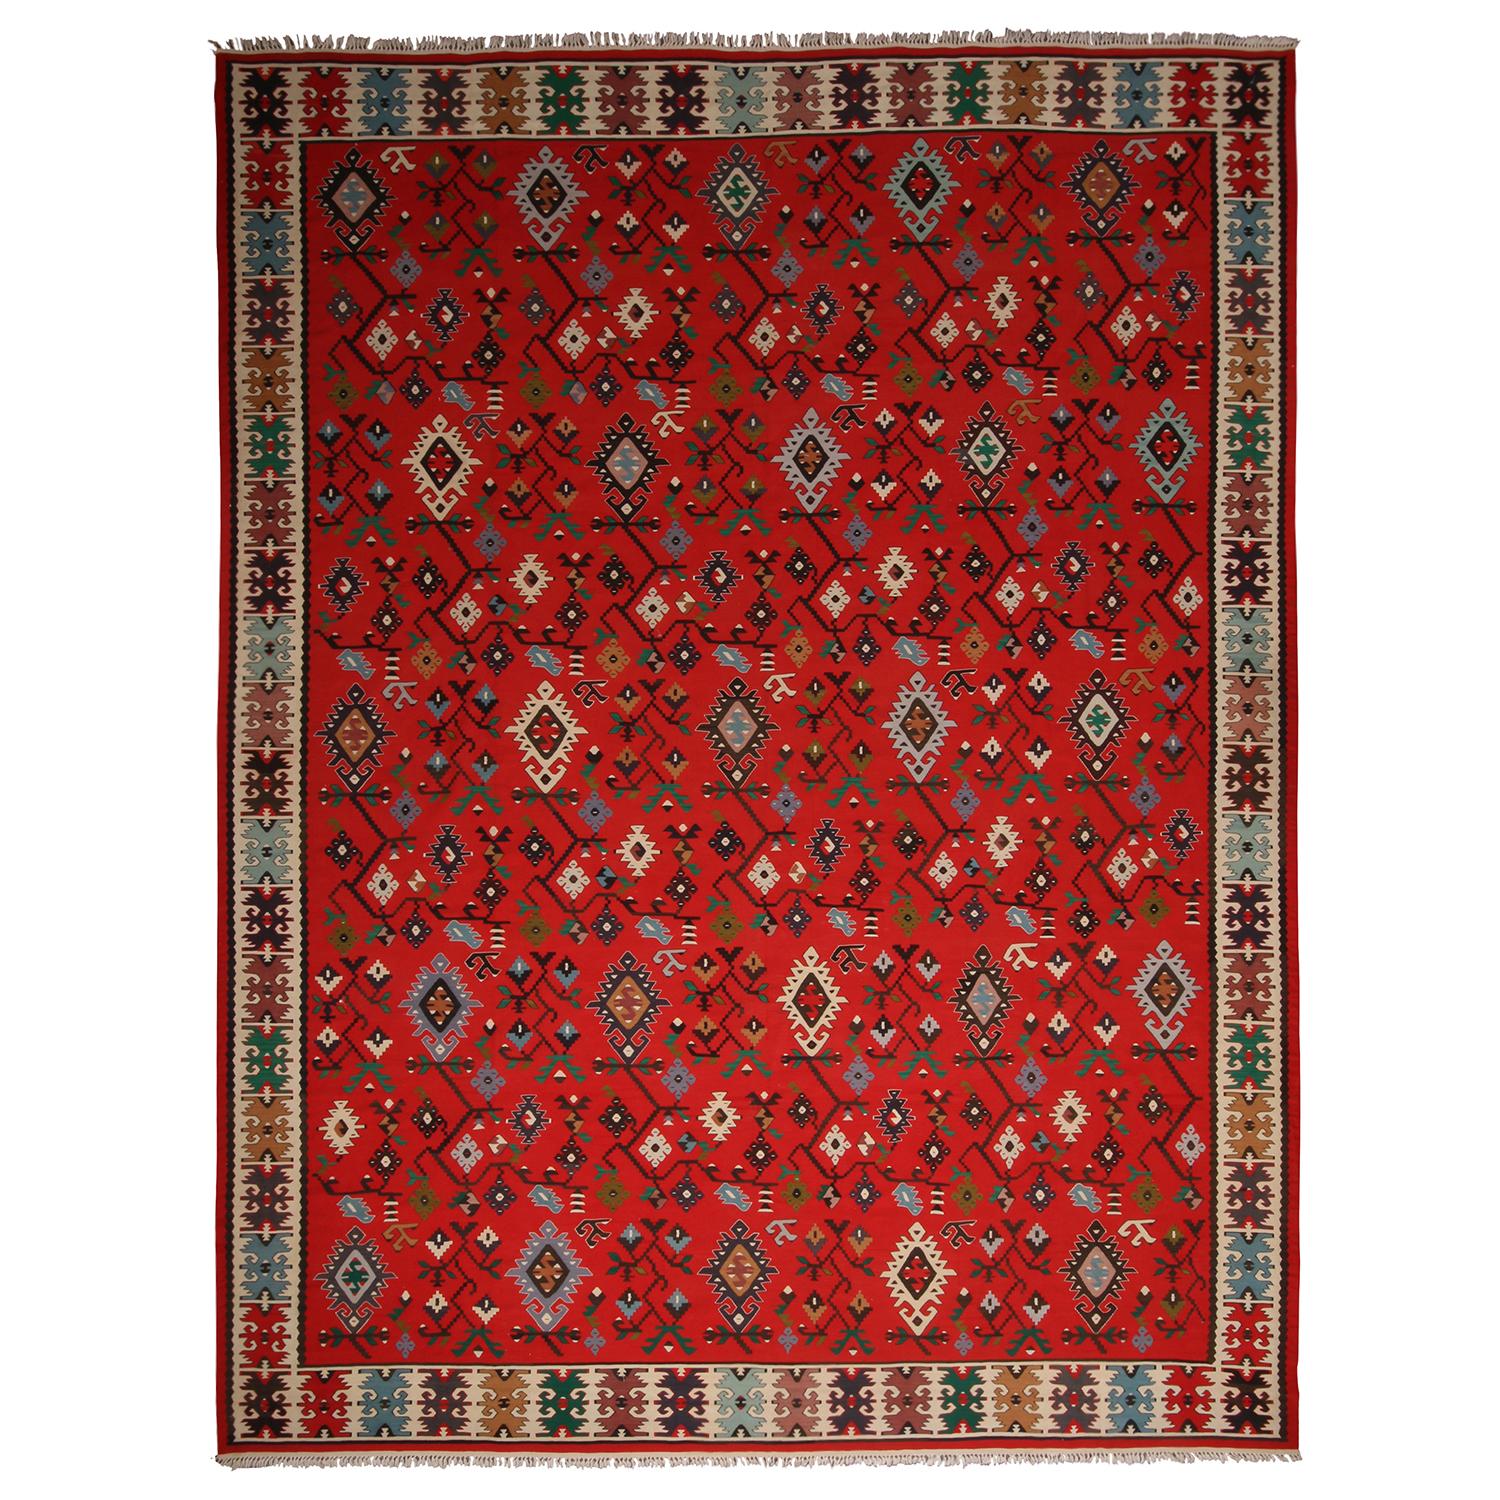 Antique Geometric Red and Beige Wool Kilim Rug by Rug & Kilim For Sale